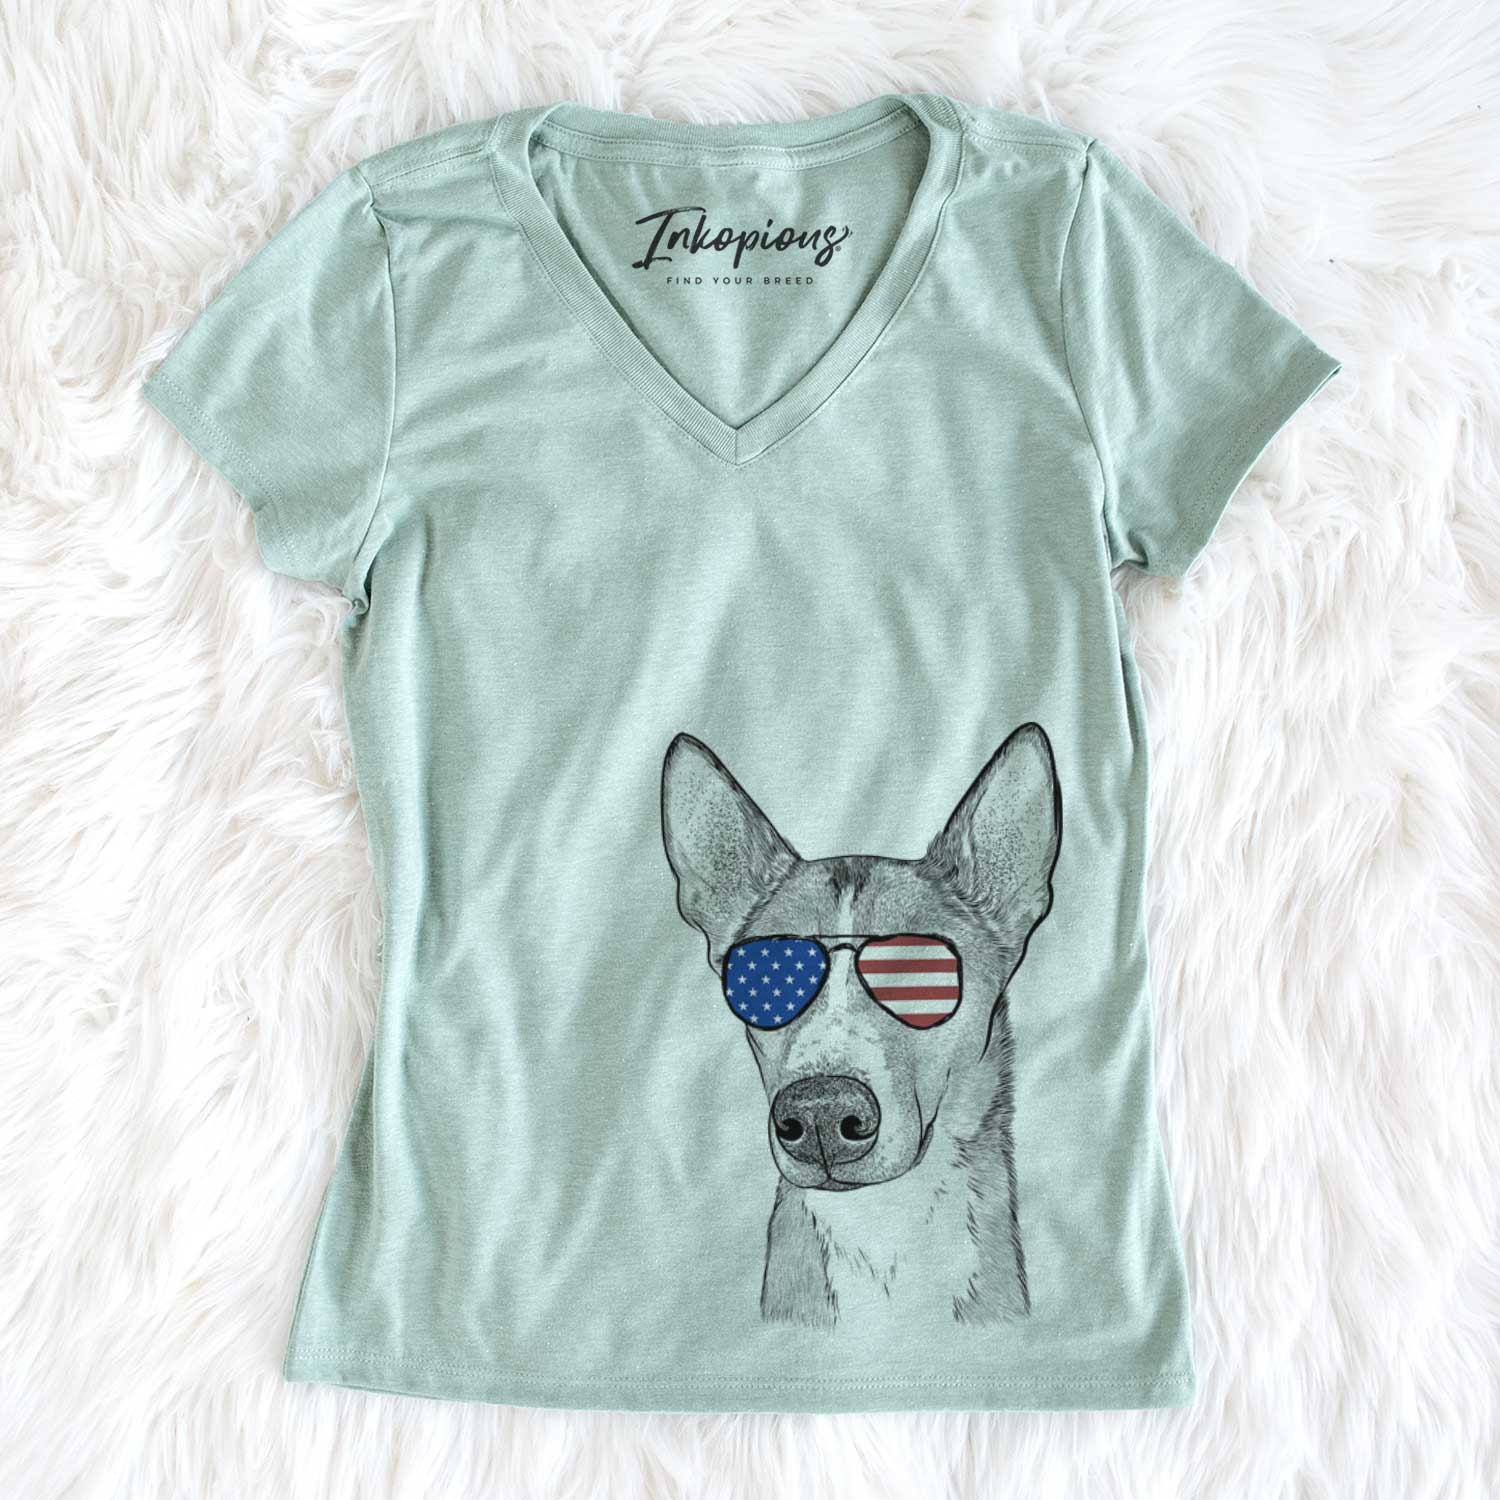 USA Anubis the Alaskan Husky - Women's Perfect V-neck Shirt